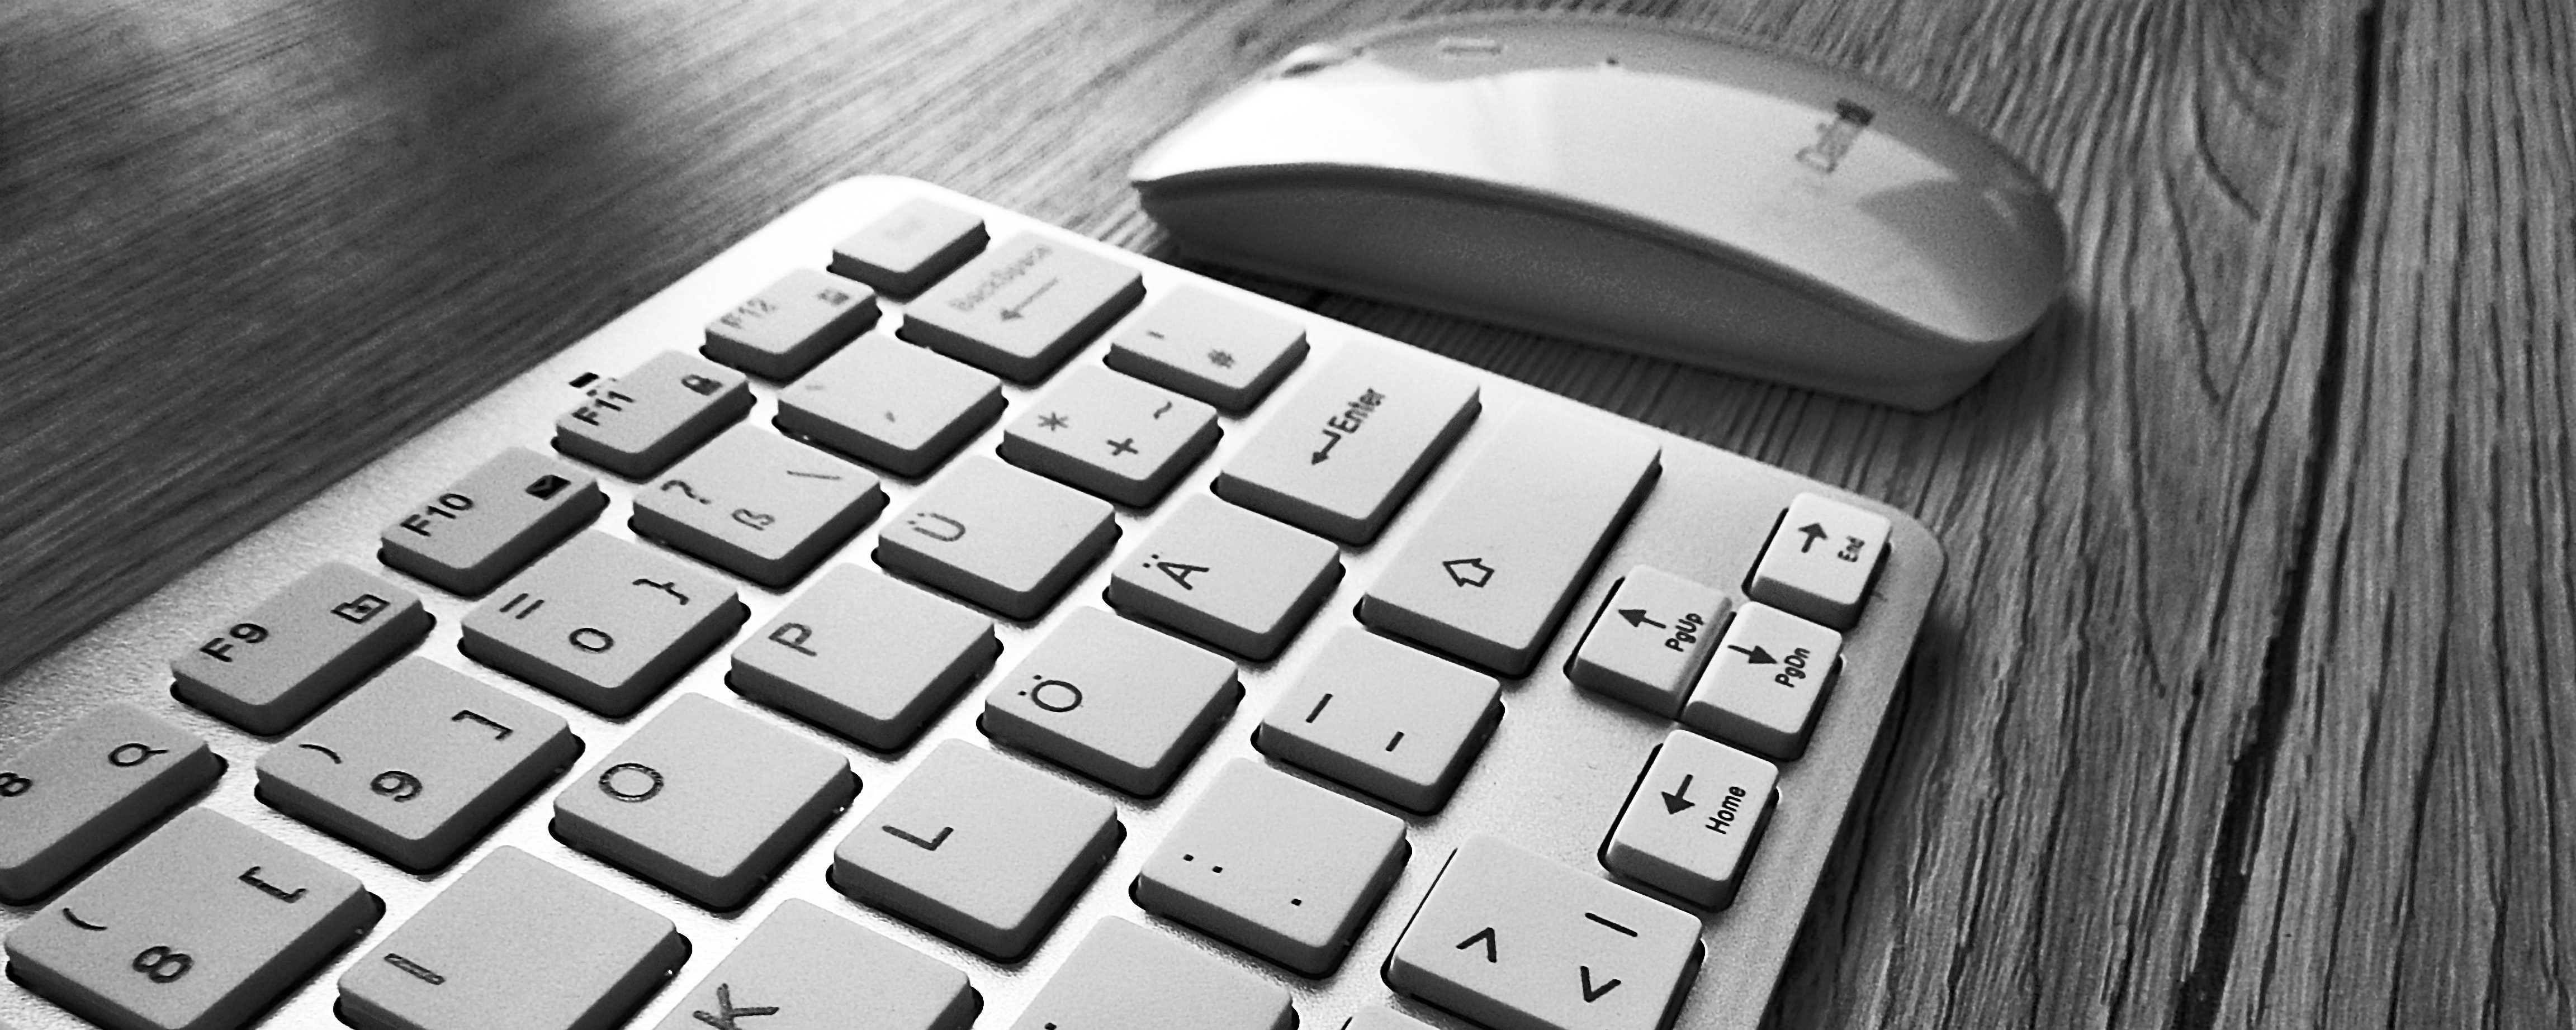 black-and-white-computer-keyboard-desk-209692